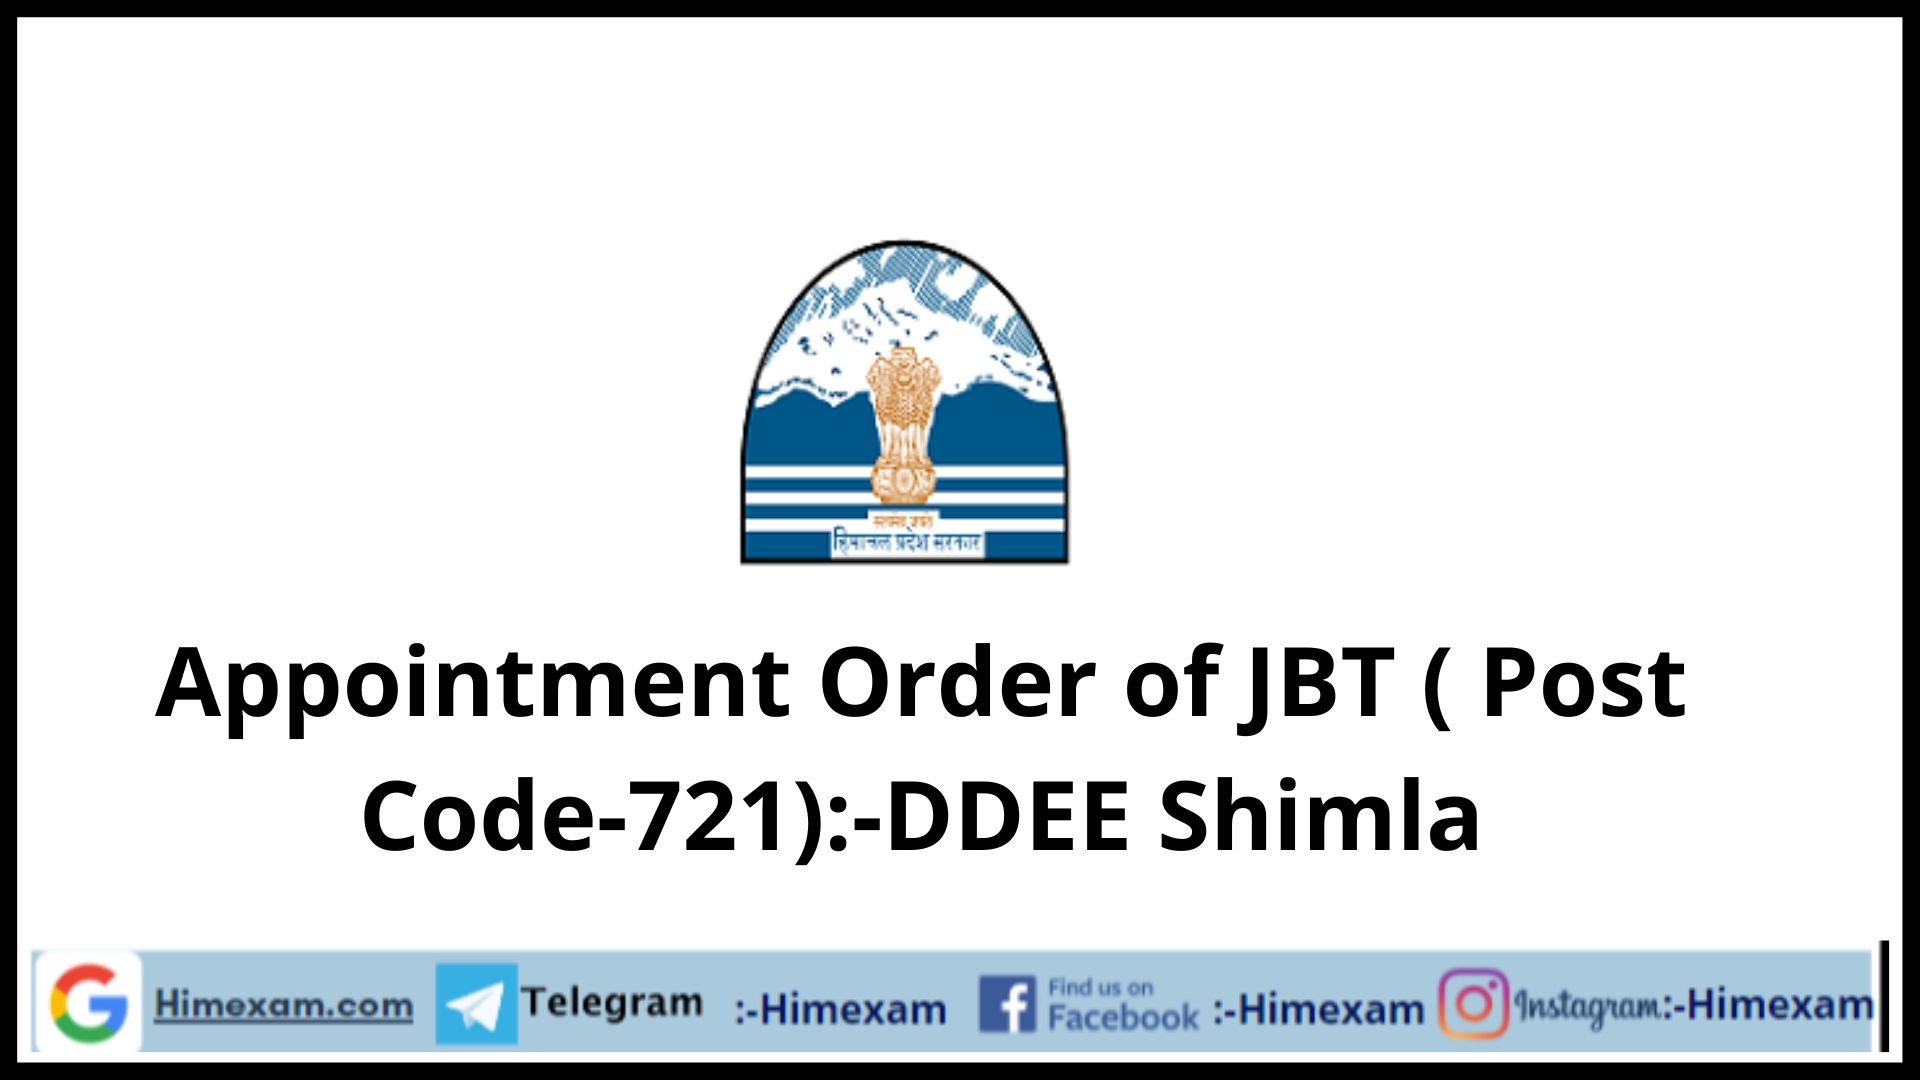 Appointment Order of JBT ( Post Code-721):-DDEE Shimla